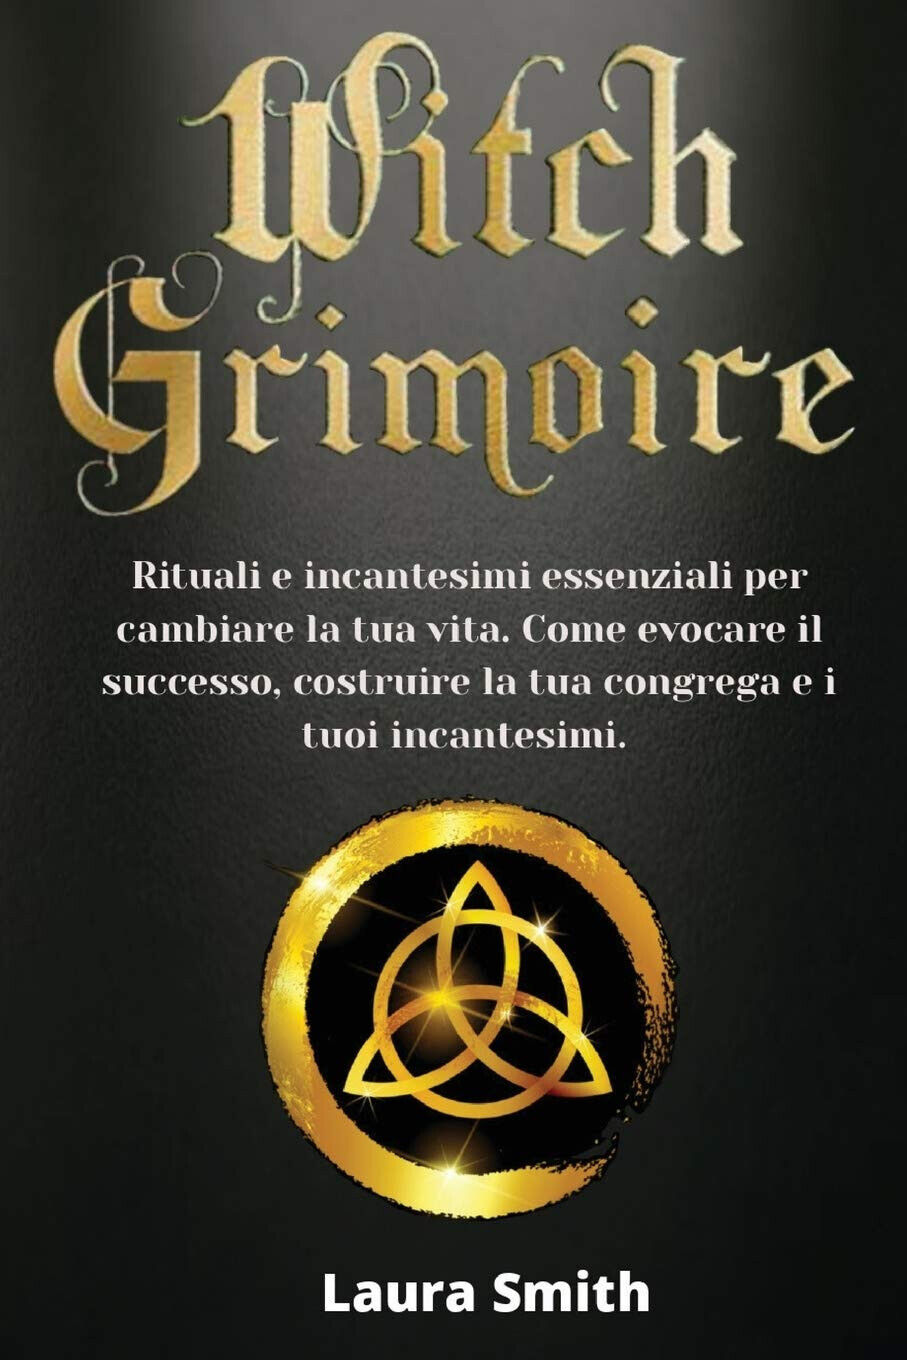 Witch Grimoire - Laura Smith - Amplitudo, 2020